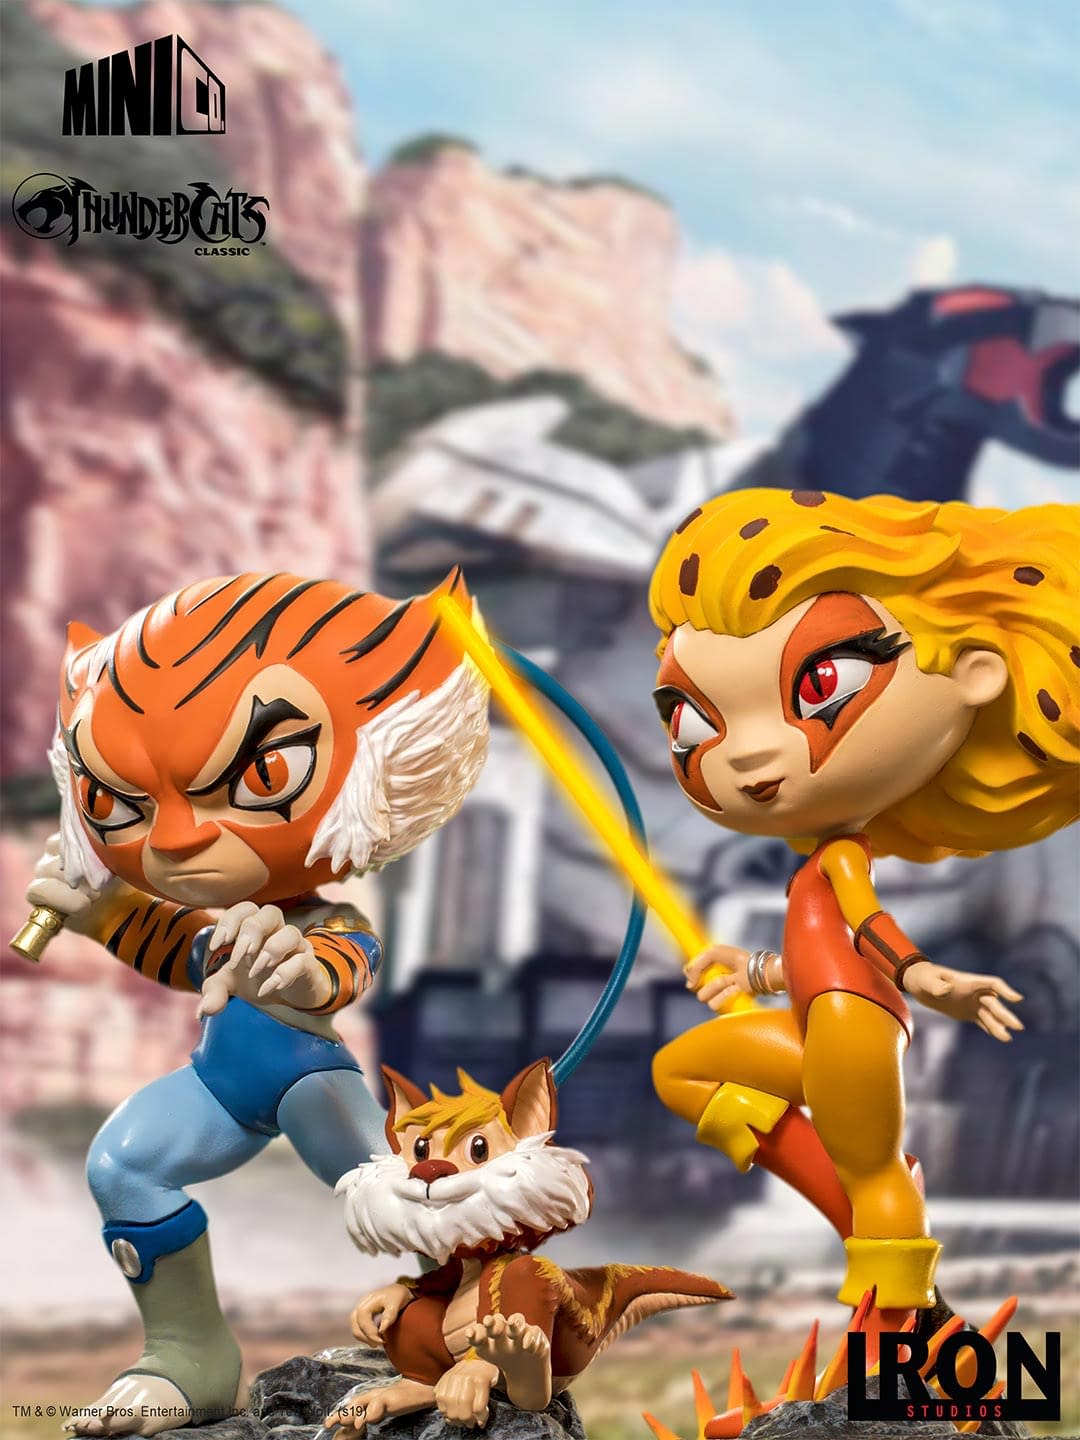 Thundercats Unite Once Again with New Iron Studios Minicos